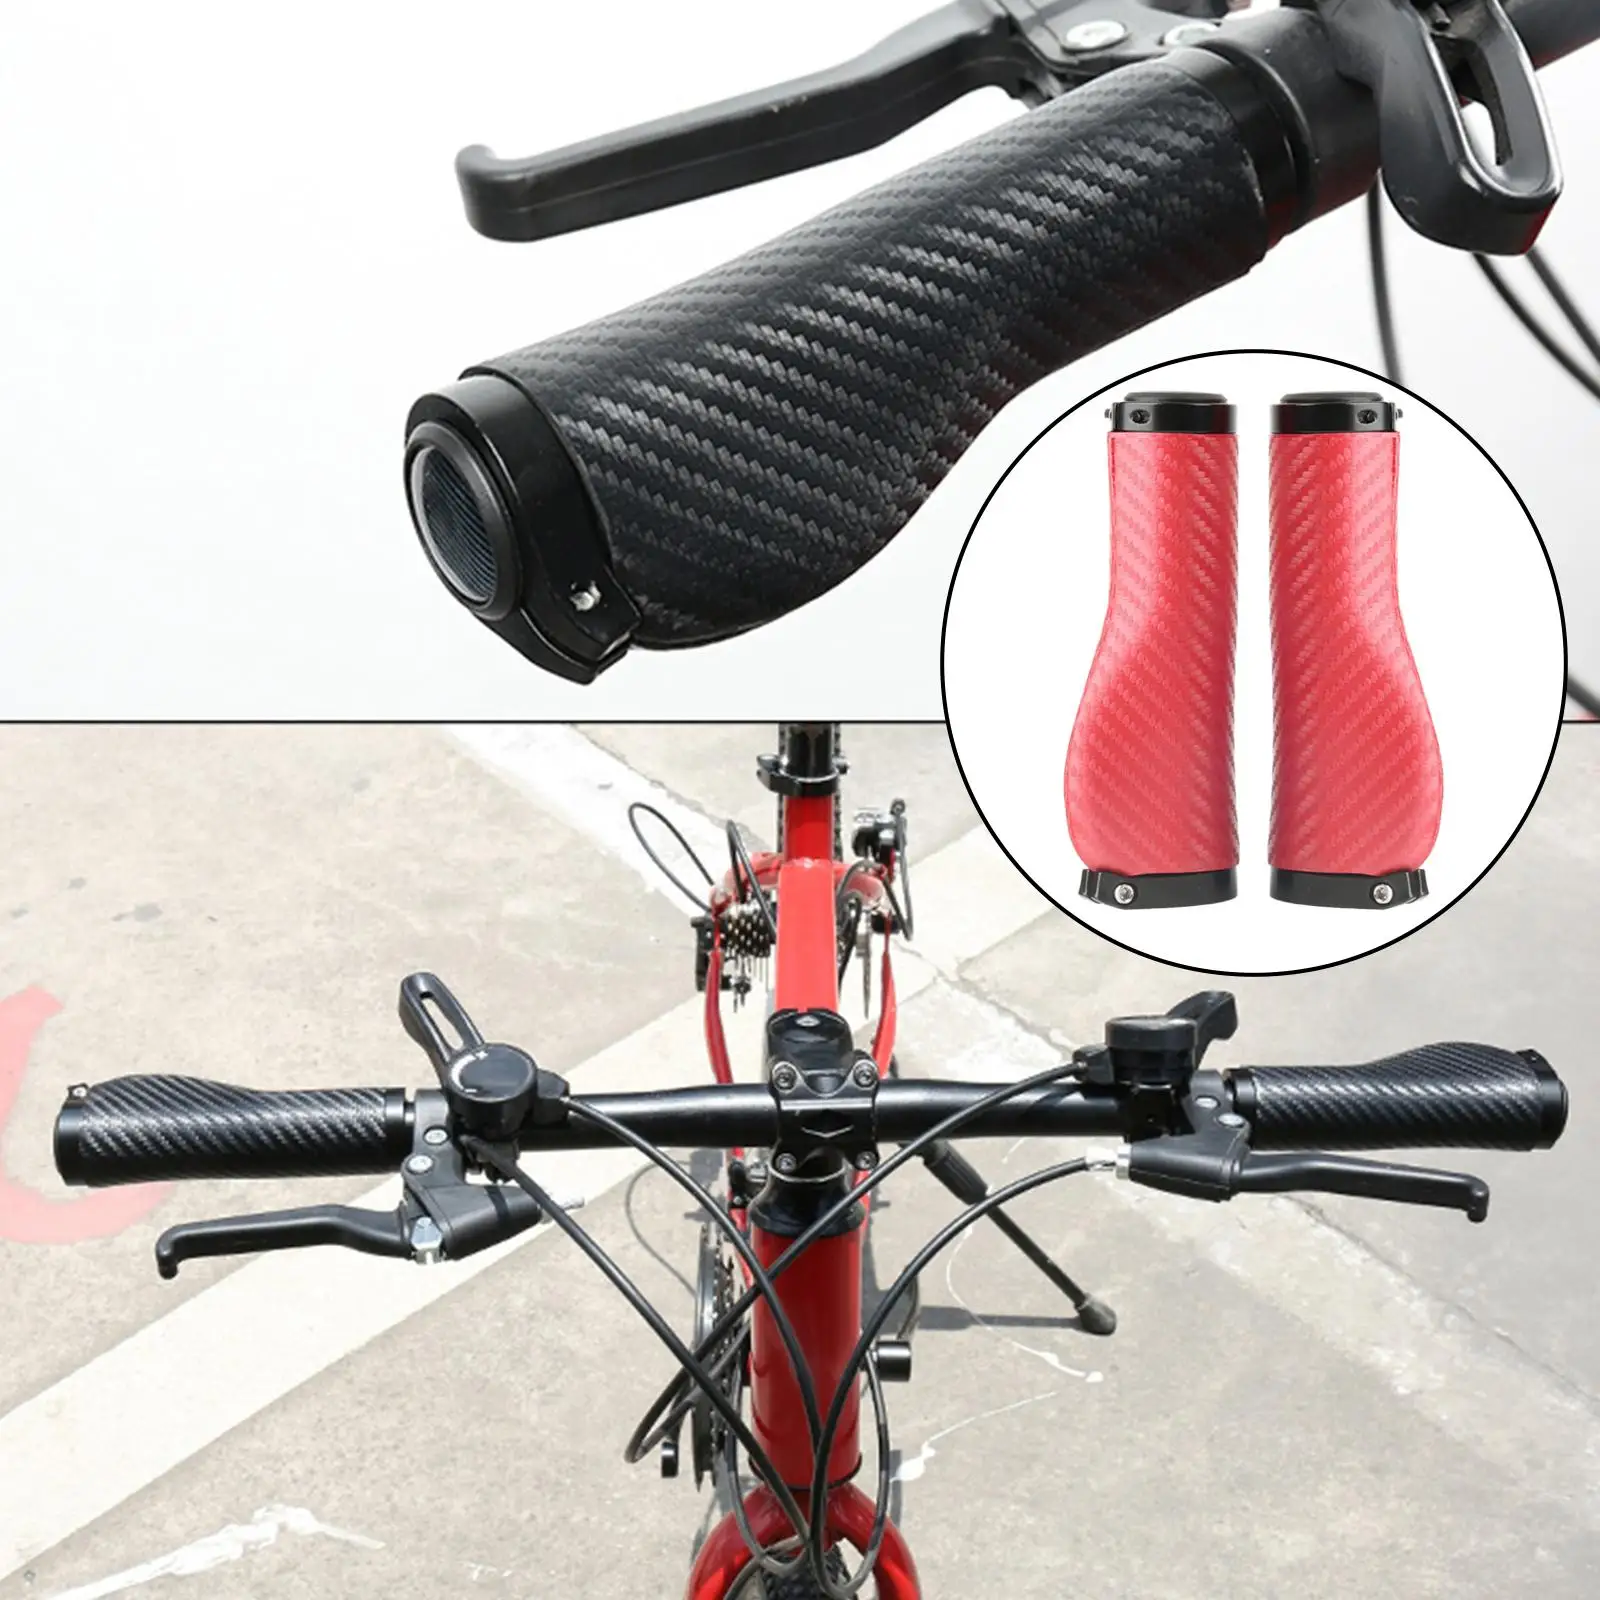 2x PU Plastic Bicycle Handlebar Grips Lock On Ergonomic Bar Grips for Mountain Bikes E Bike Scooter Bicycle Grips Riding